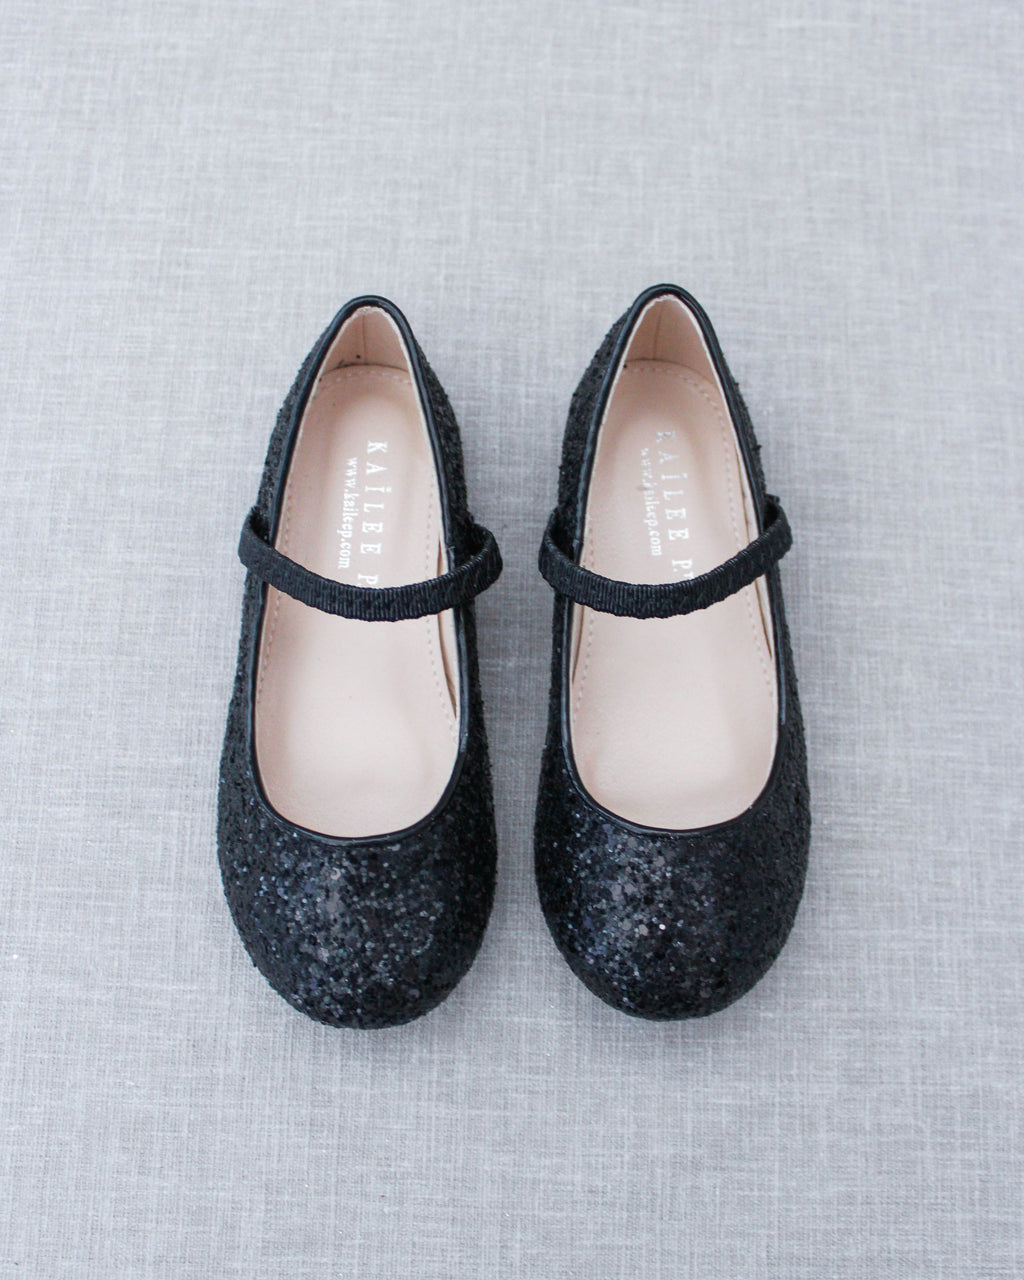 Black Rock Glitter Mary Jane Ballet Flats - Flower Girls Shoes, Girls Shoes, Glitter Shoes 2 Little Kid